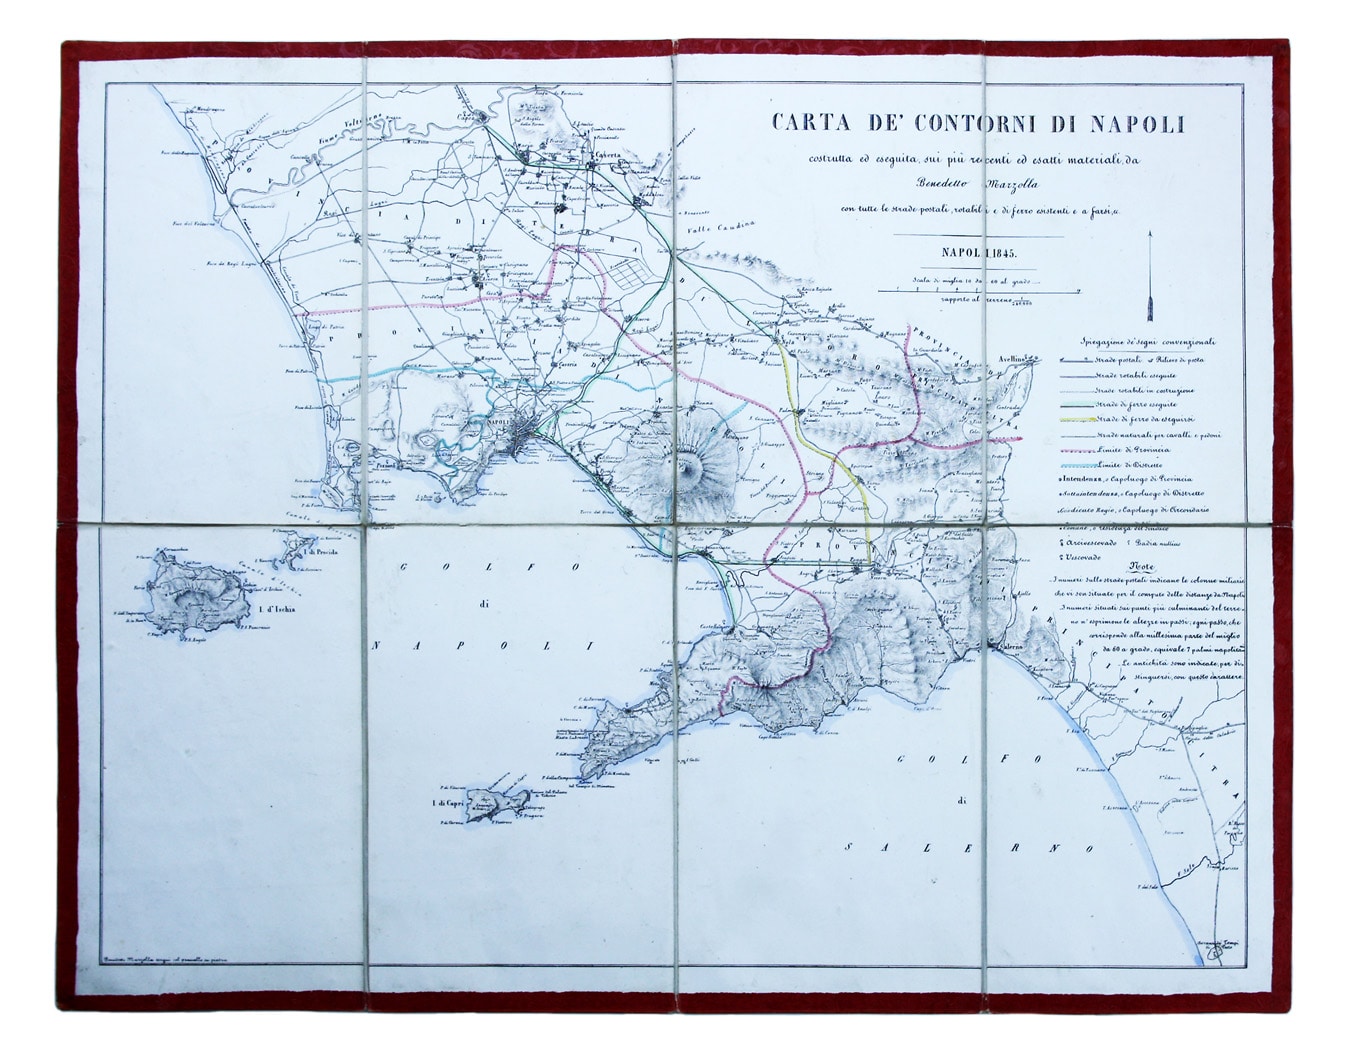 Marzolla’s Plan of Naples